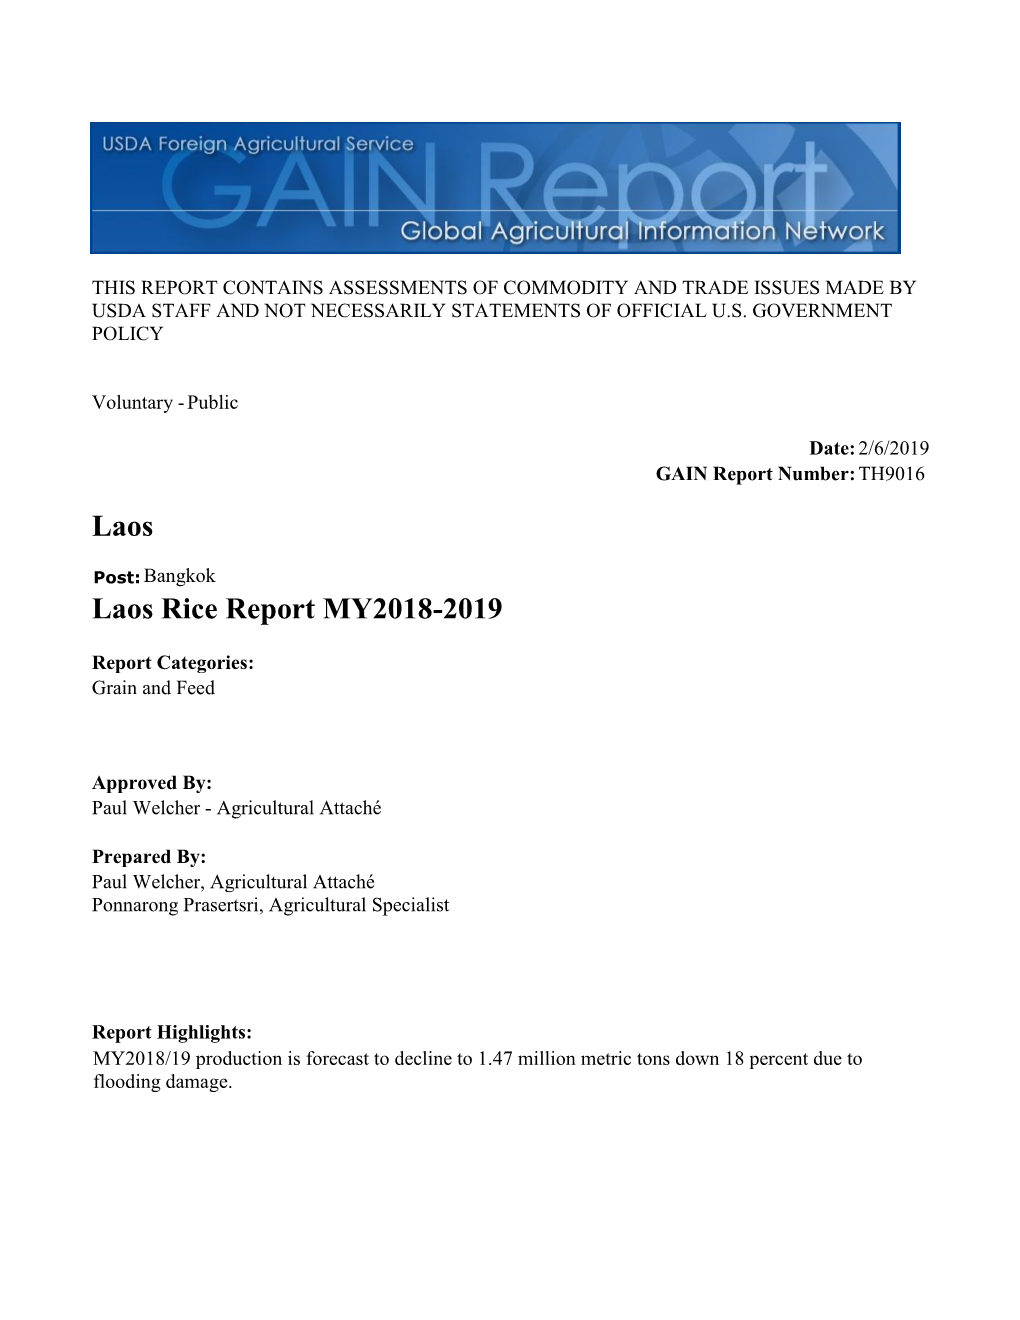 Laos Rice Report MY2018-2019